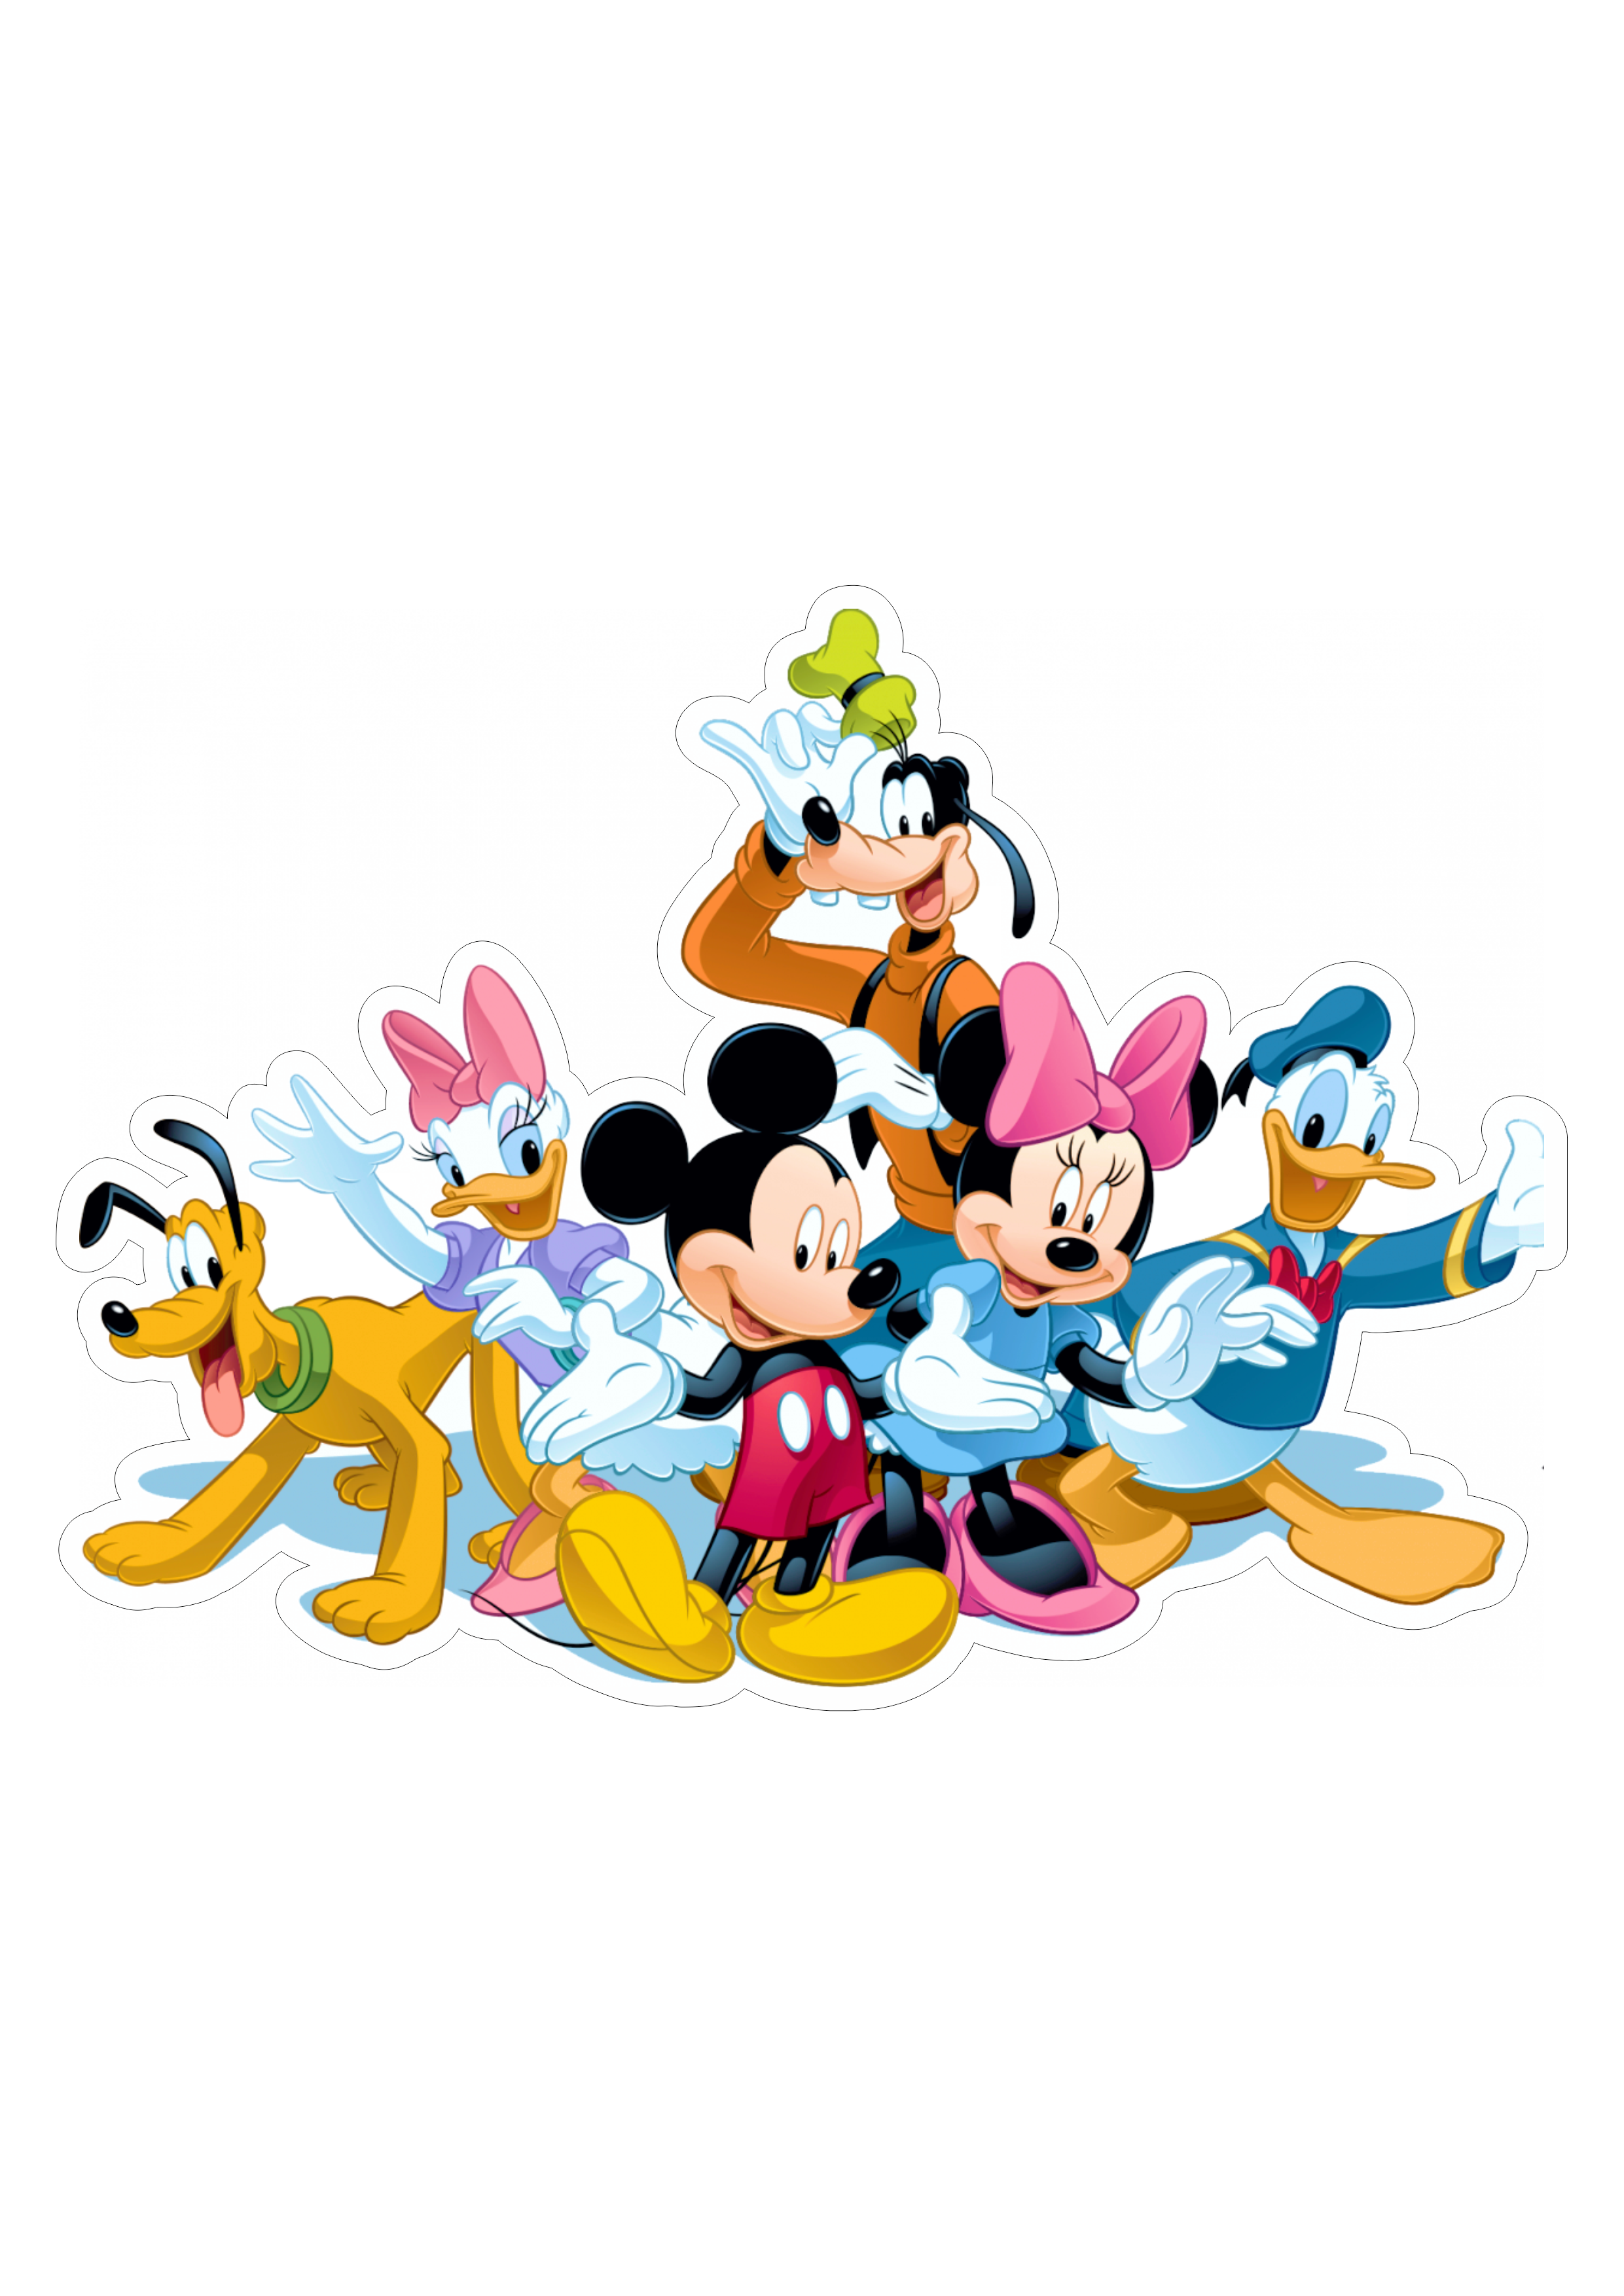 Mickey Minnie Pateta Pluto Margarida Pato Donald turma completa da Disney png